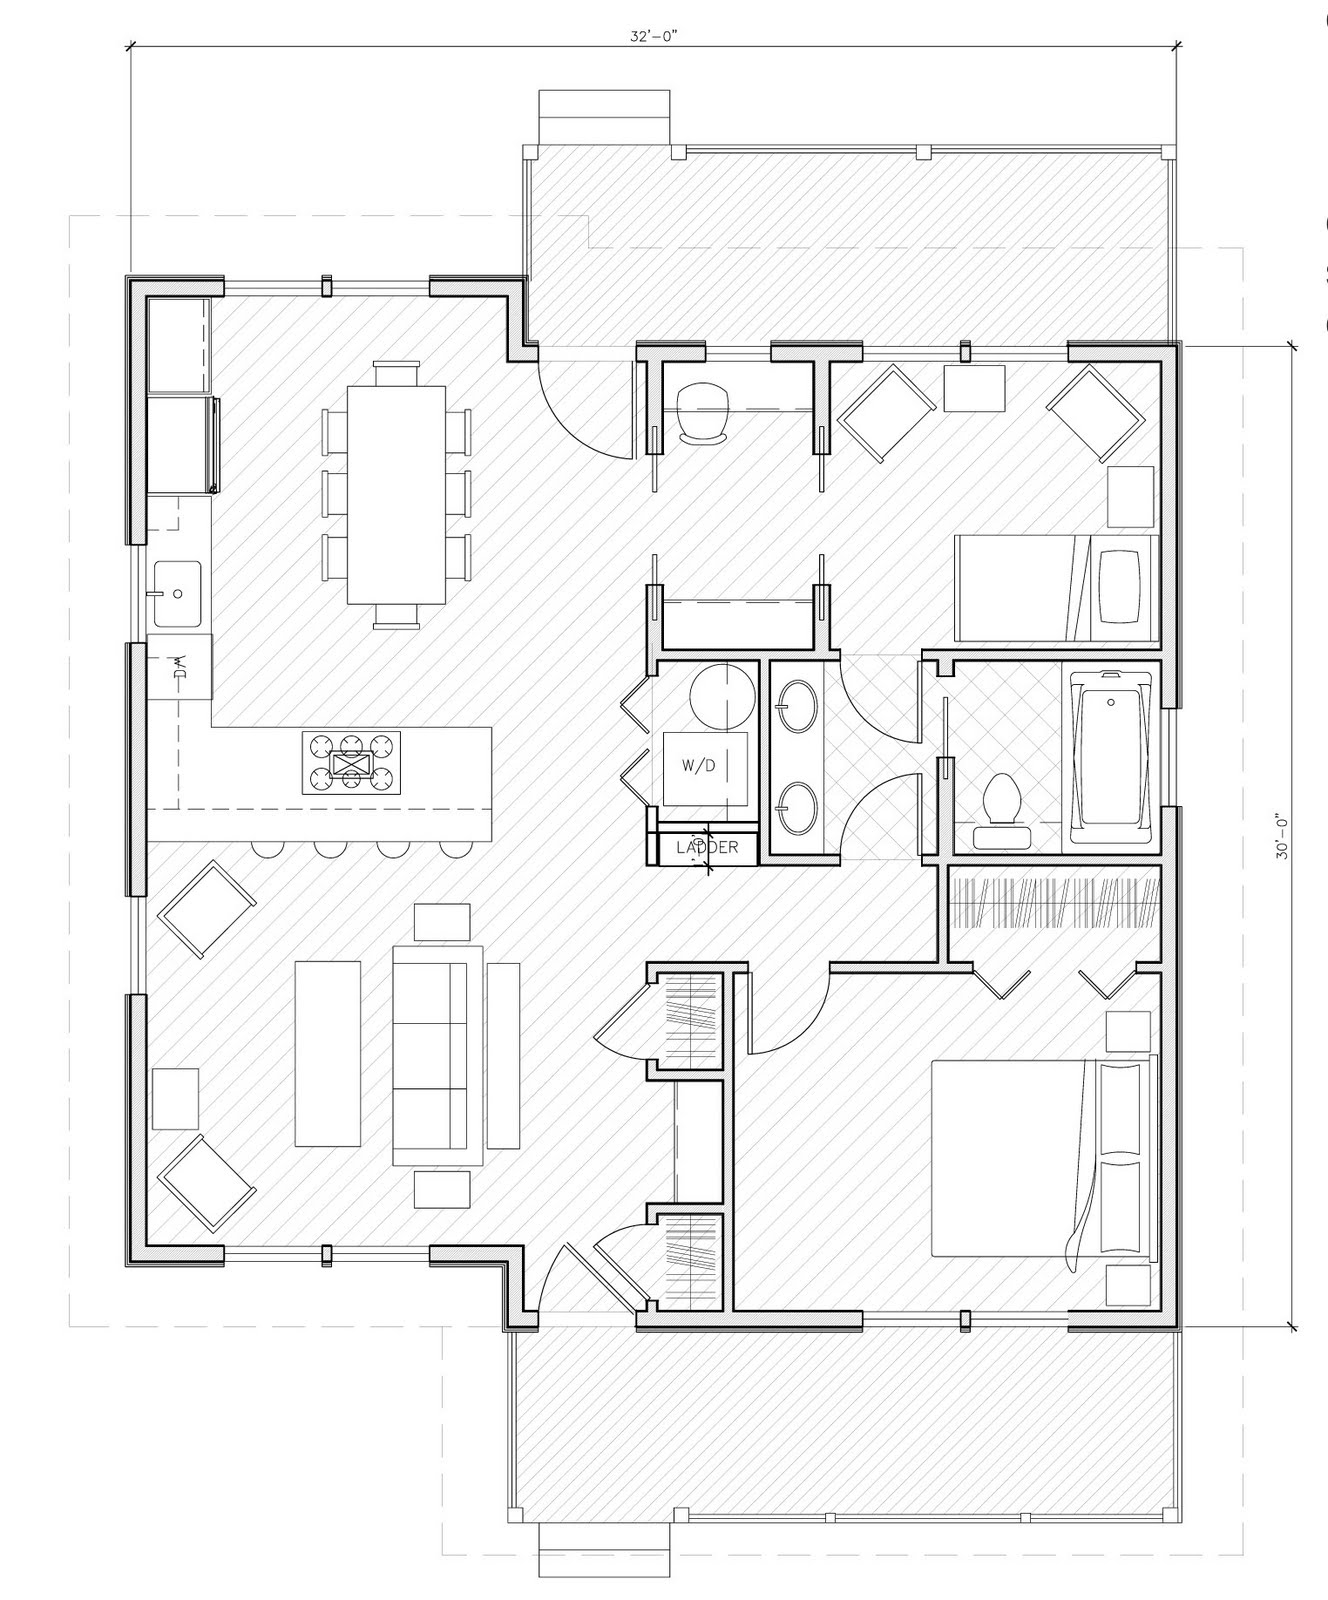  House  Plans  Under  1000  Square  Feet  Joy Studio Design 